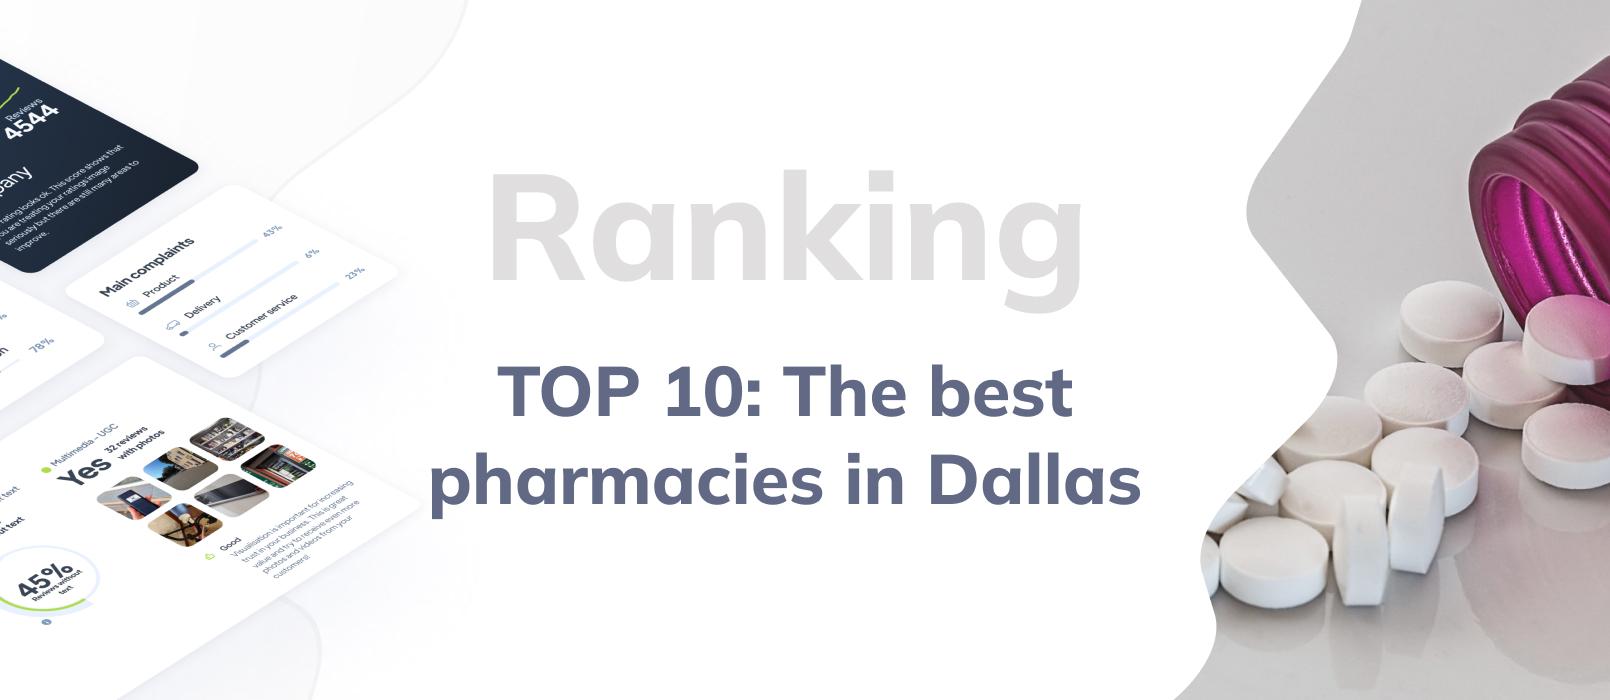 Pharmacies in Dallas - TOP 10 ranking